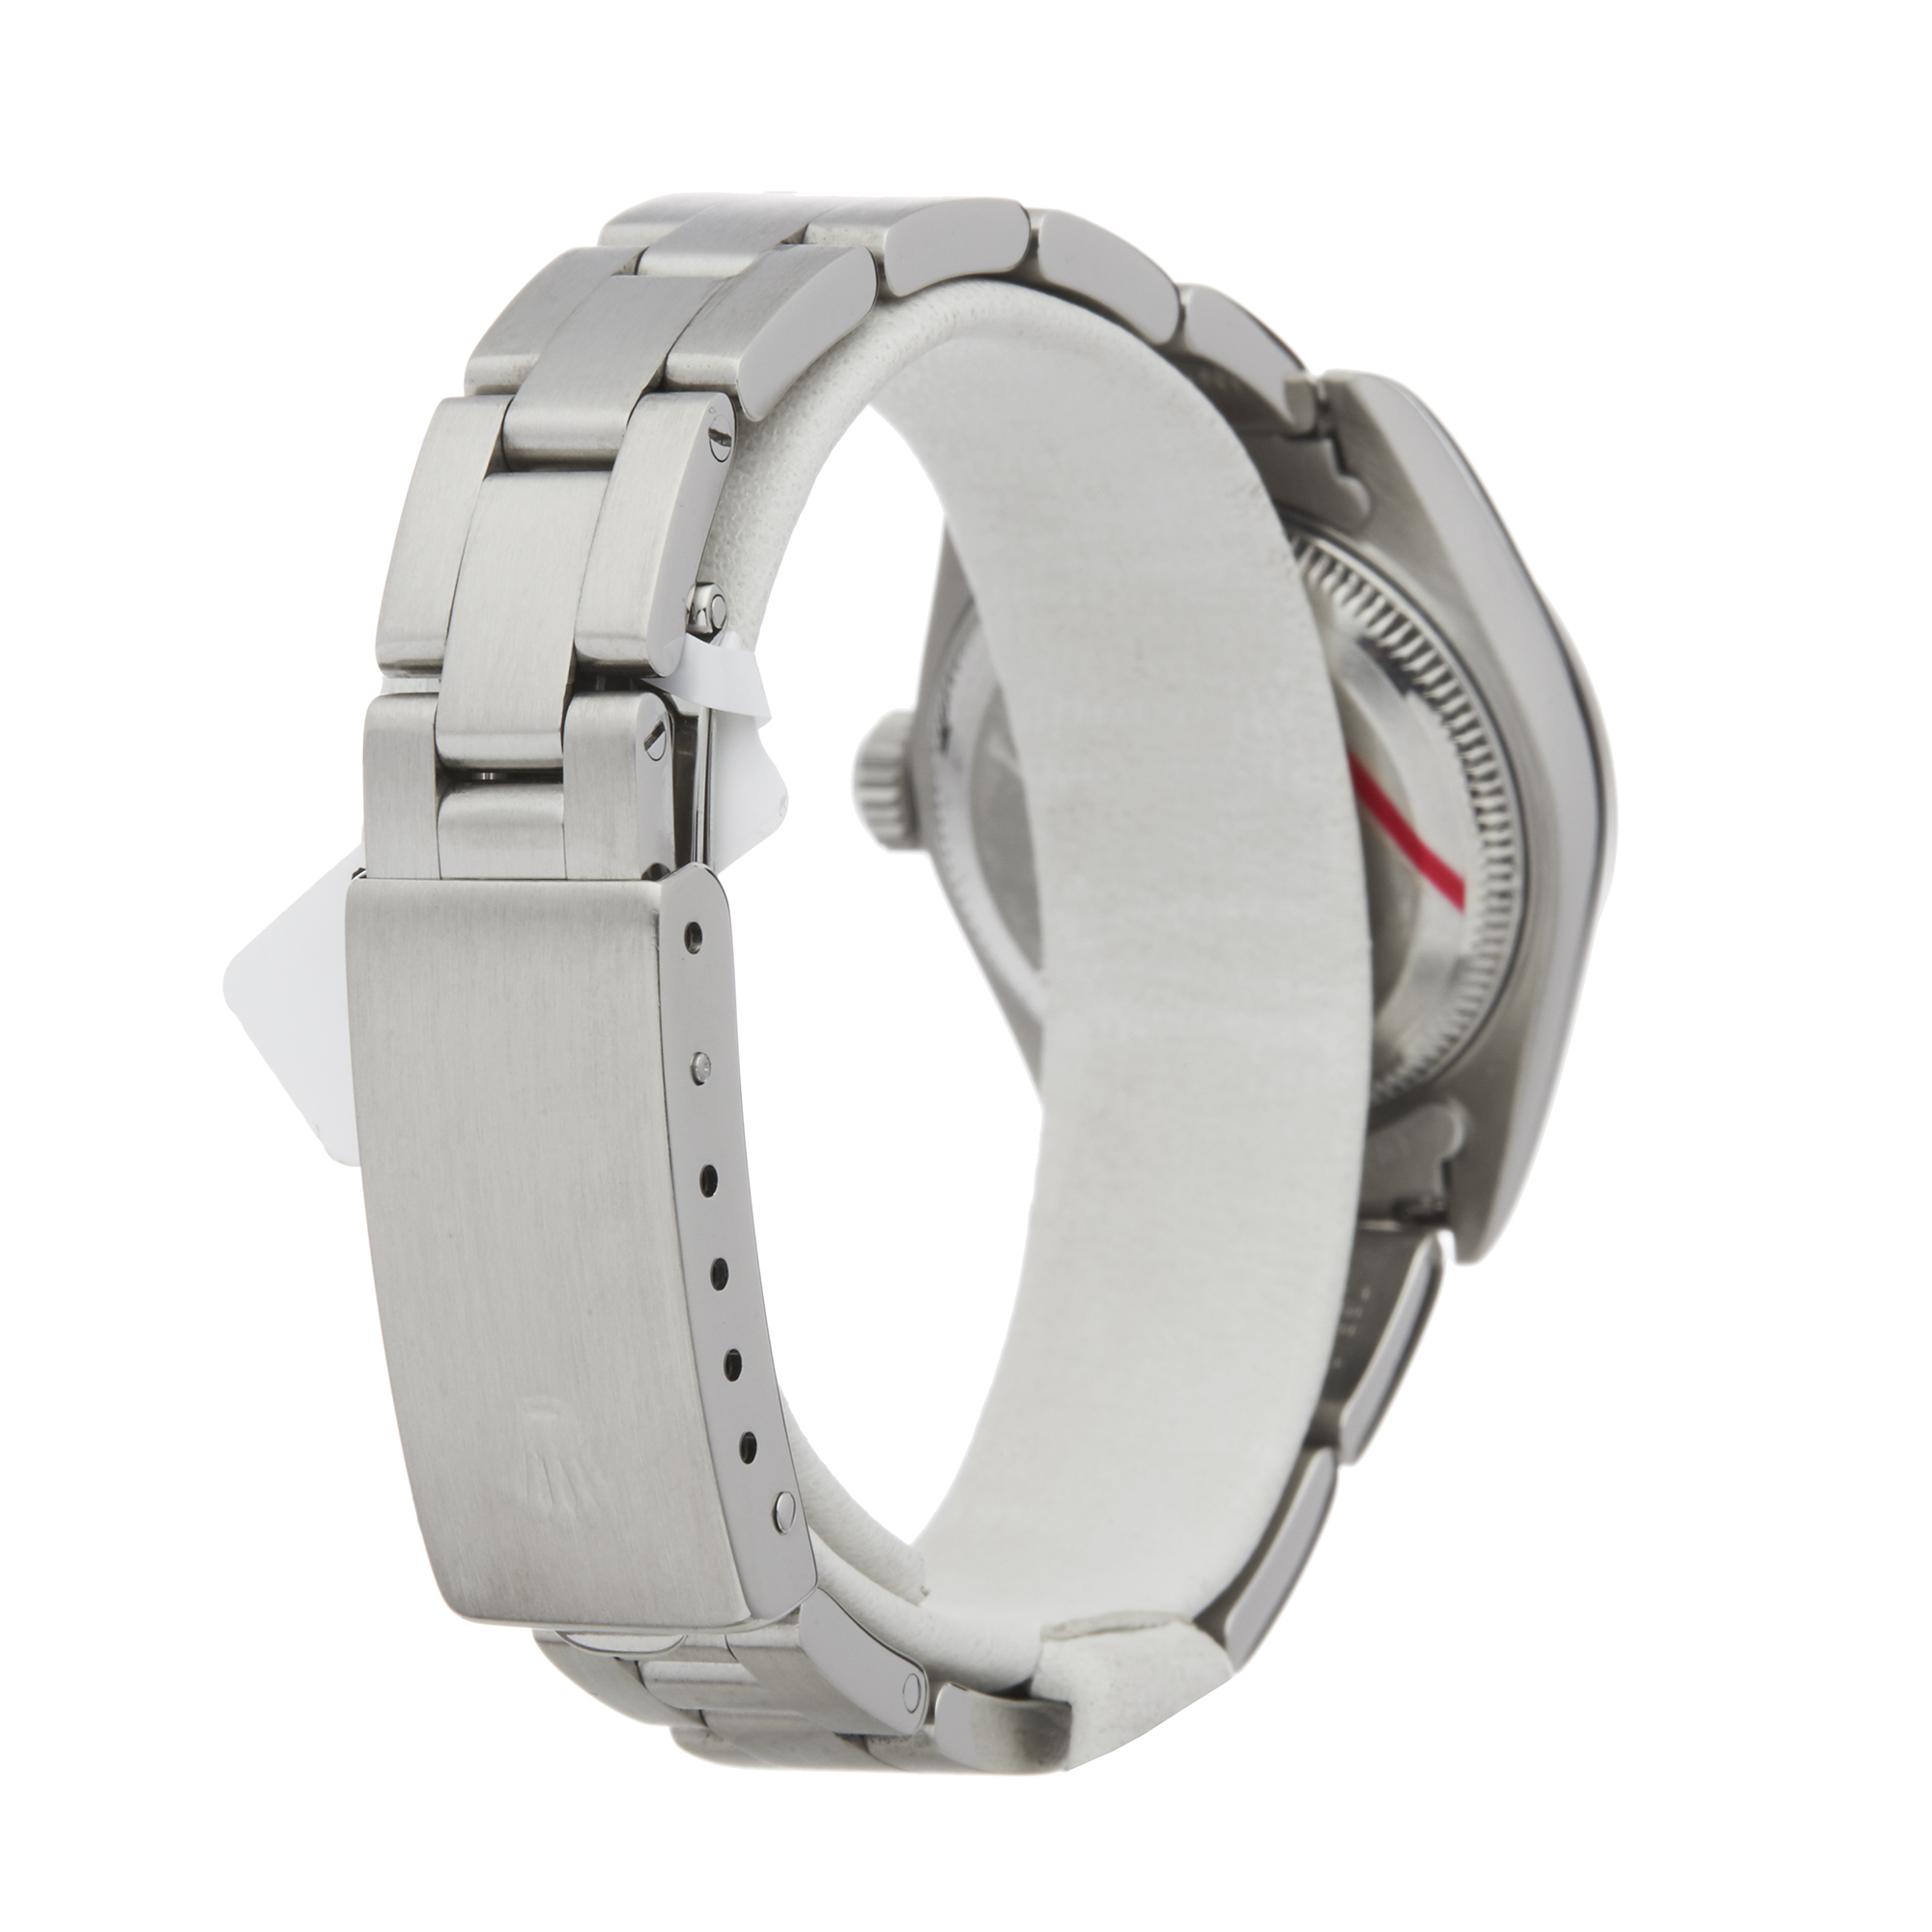 Rolex Datejust 26 69174 Ladies Stainless Steel Graduated Diamond Watch - Image 4 of 7